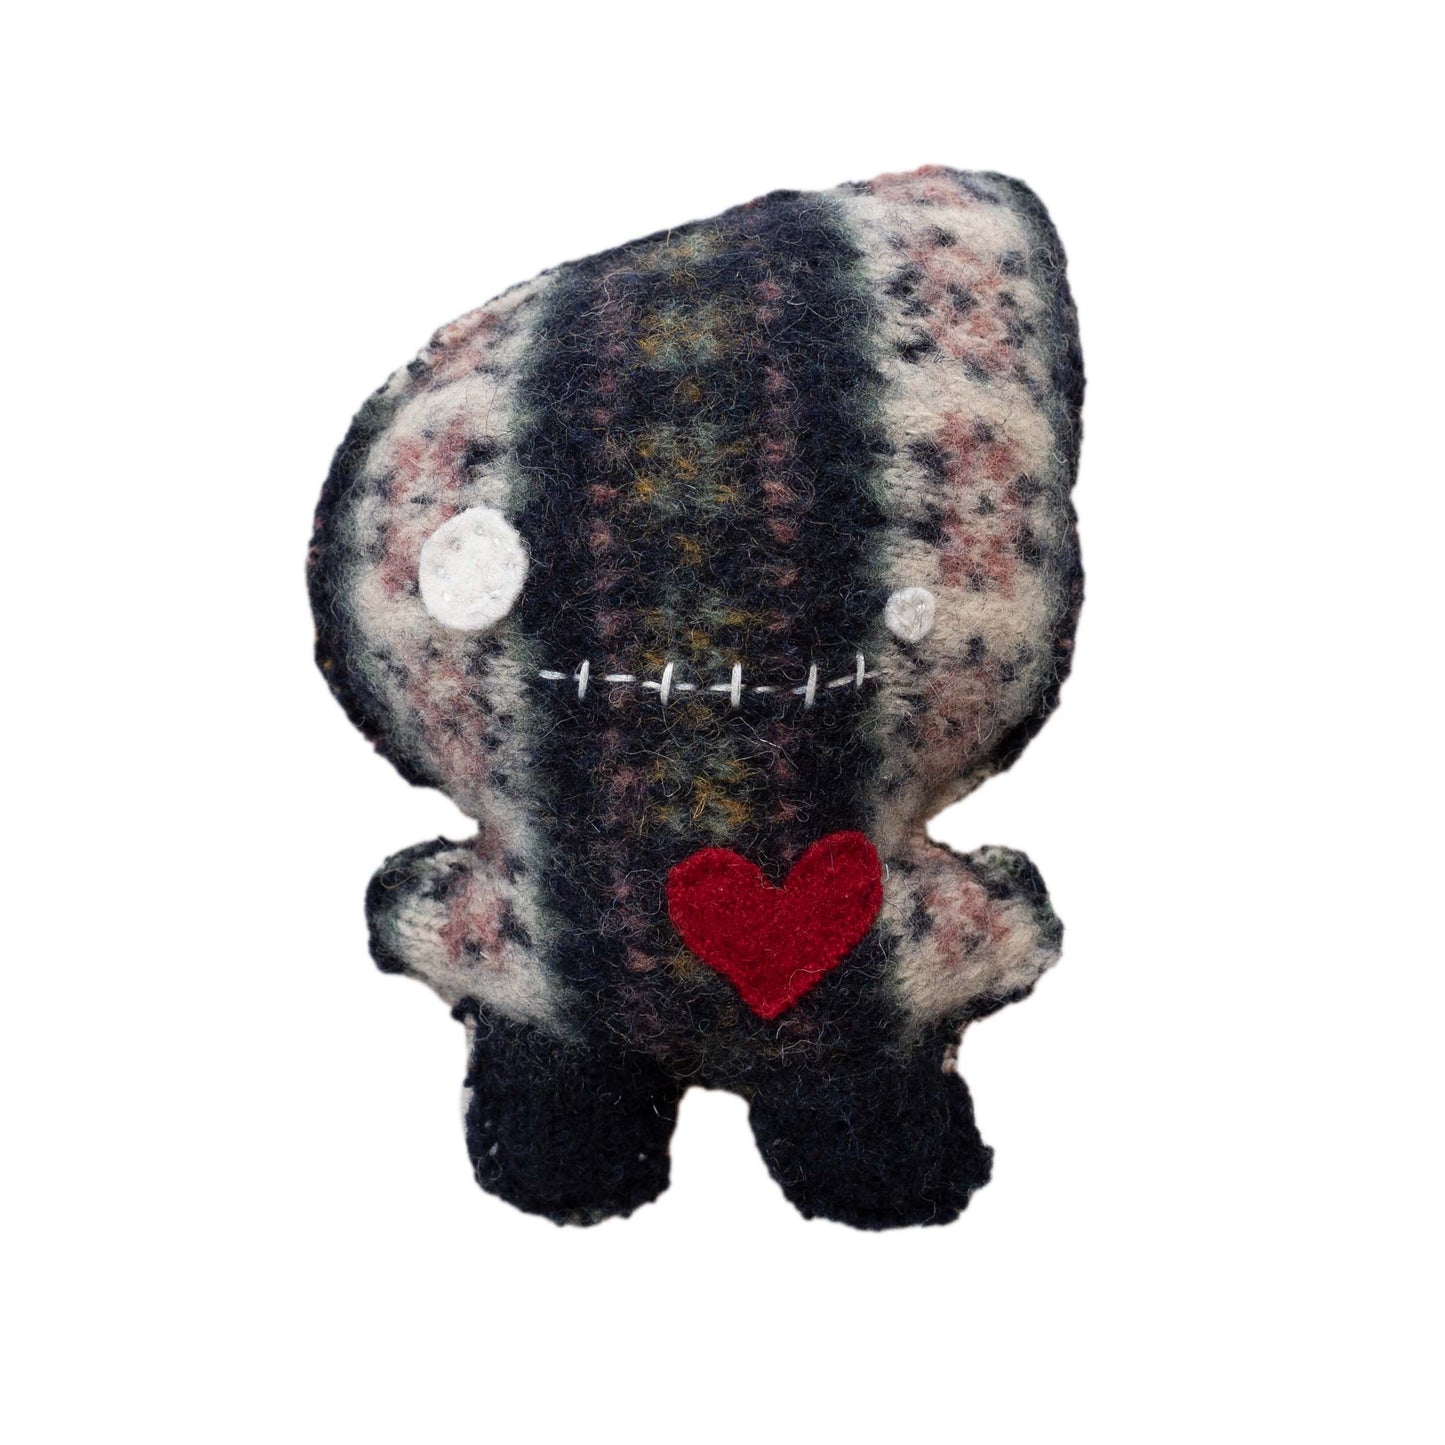 Heart doll sweater plush